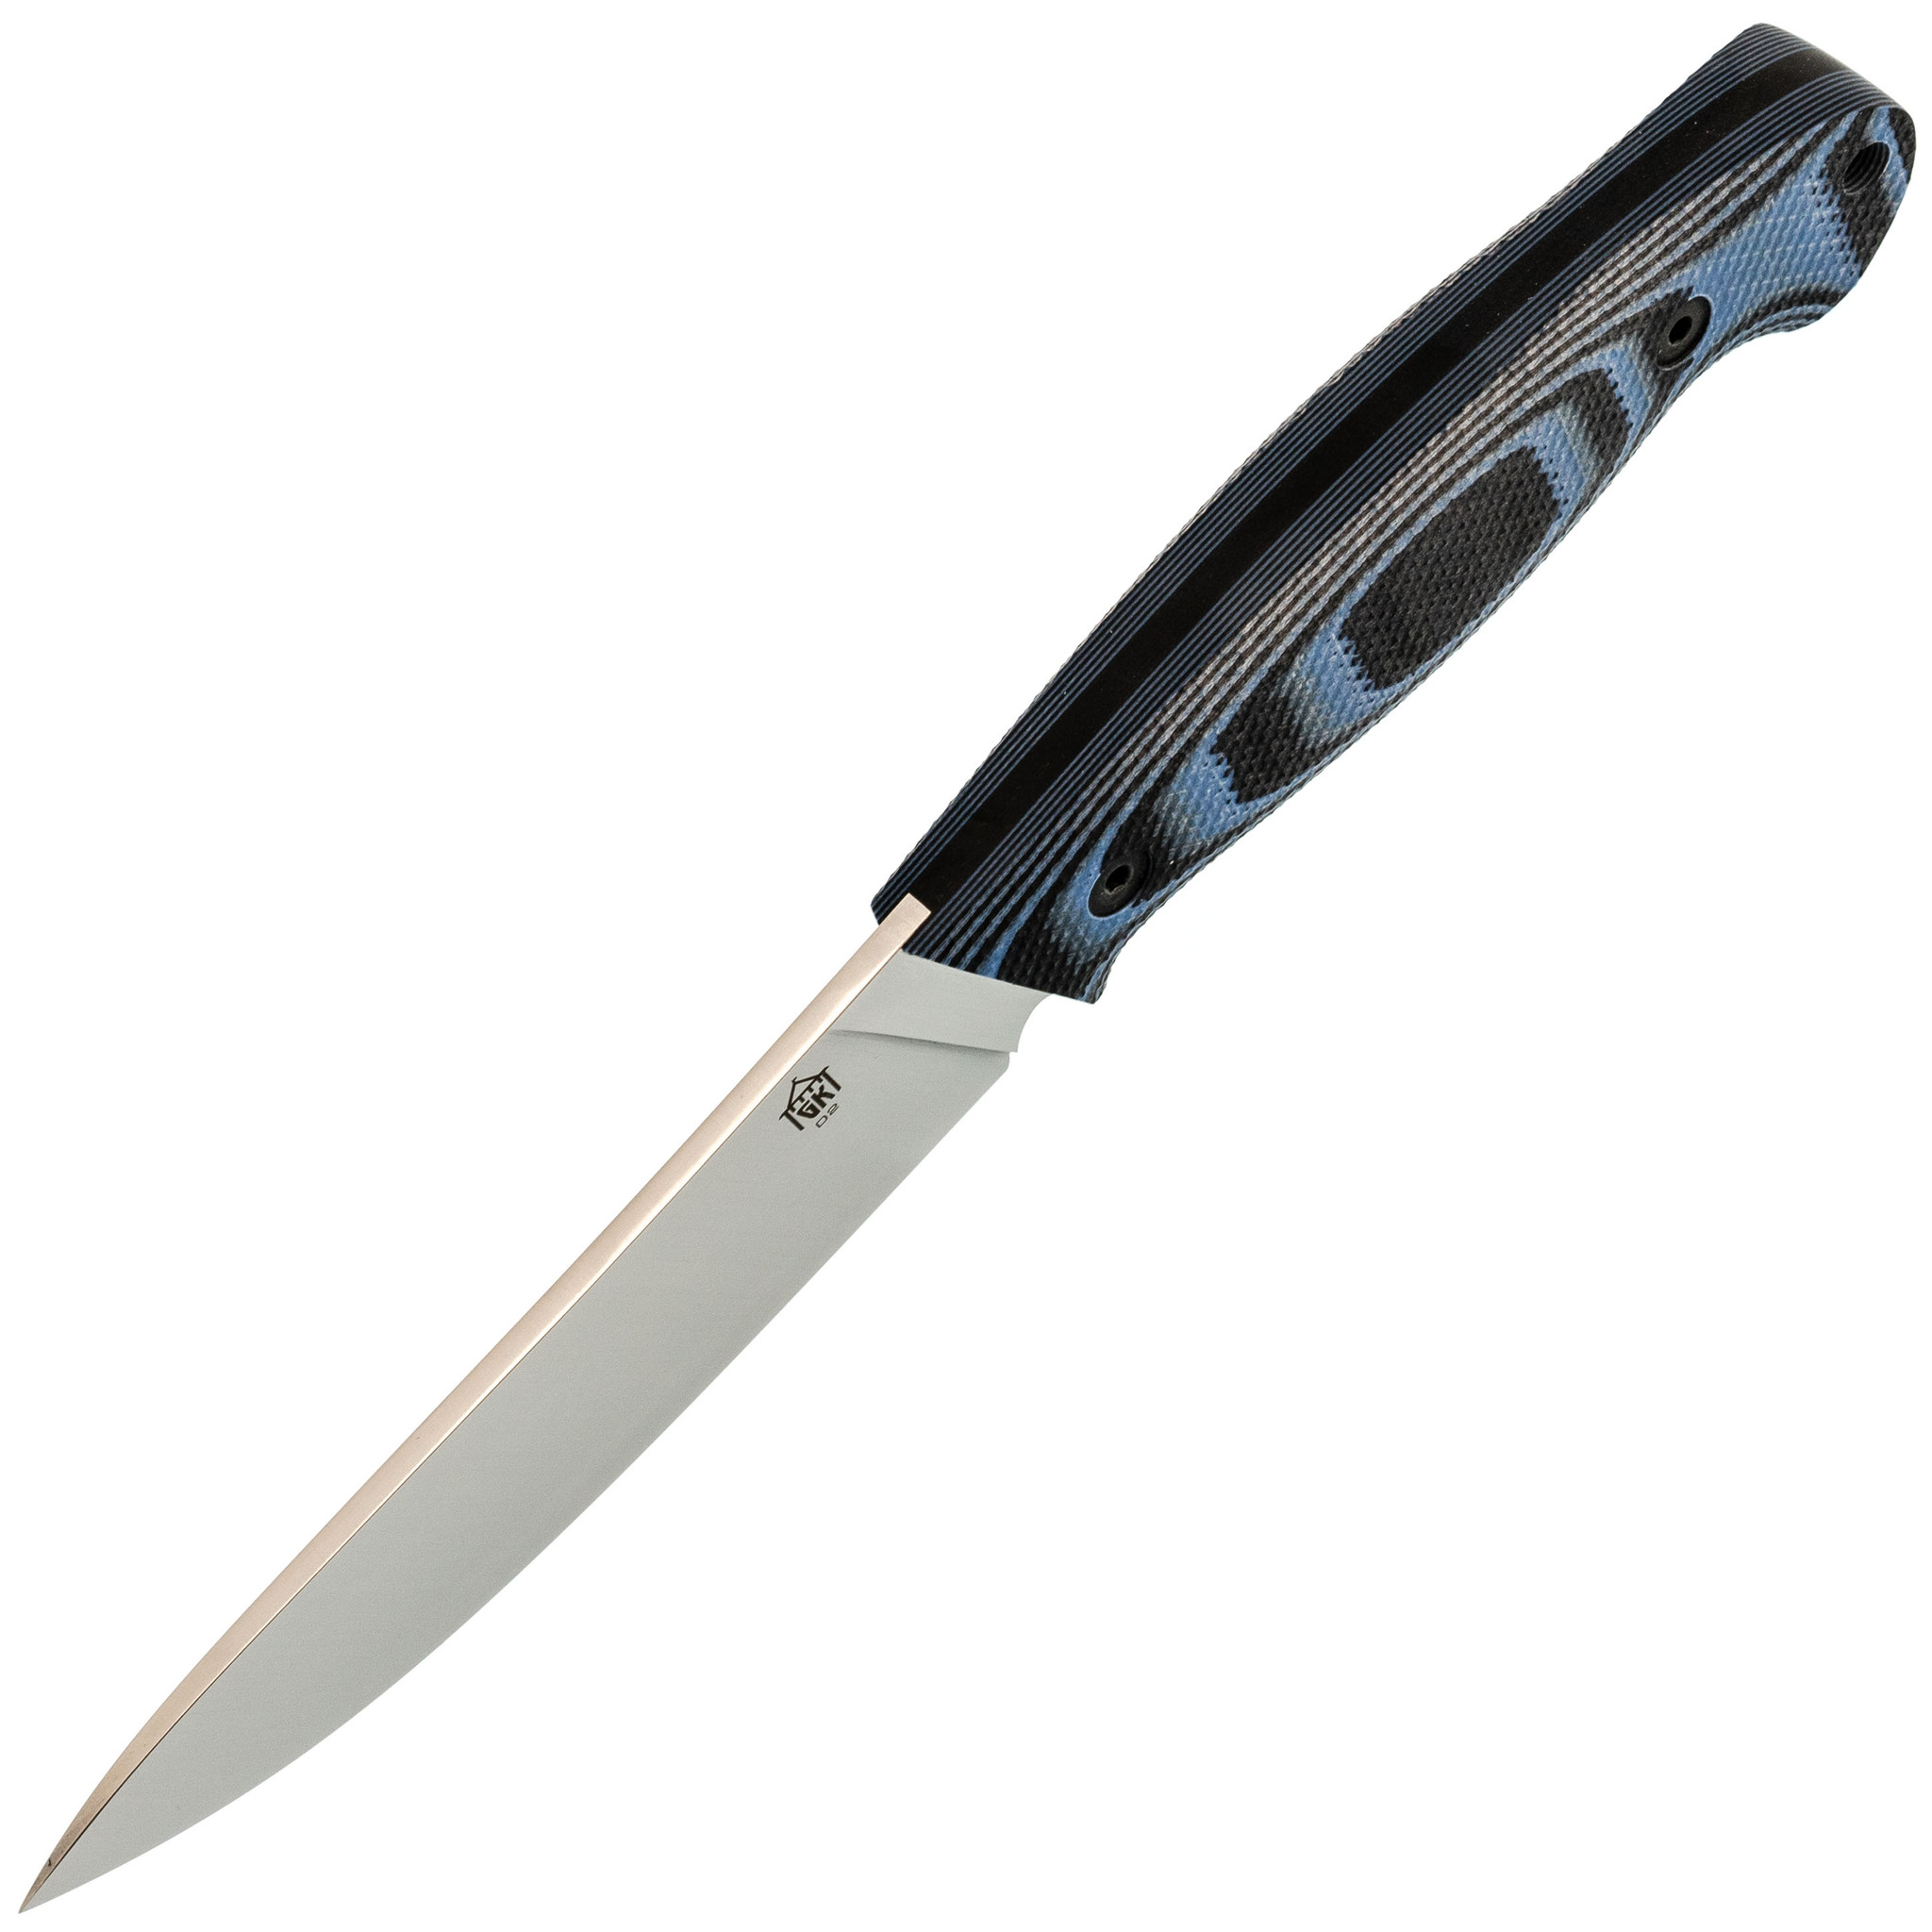 Нож Охотник, сталь D2, рукоять G10 черно-синяя - фото 4